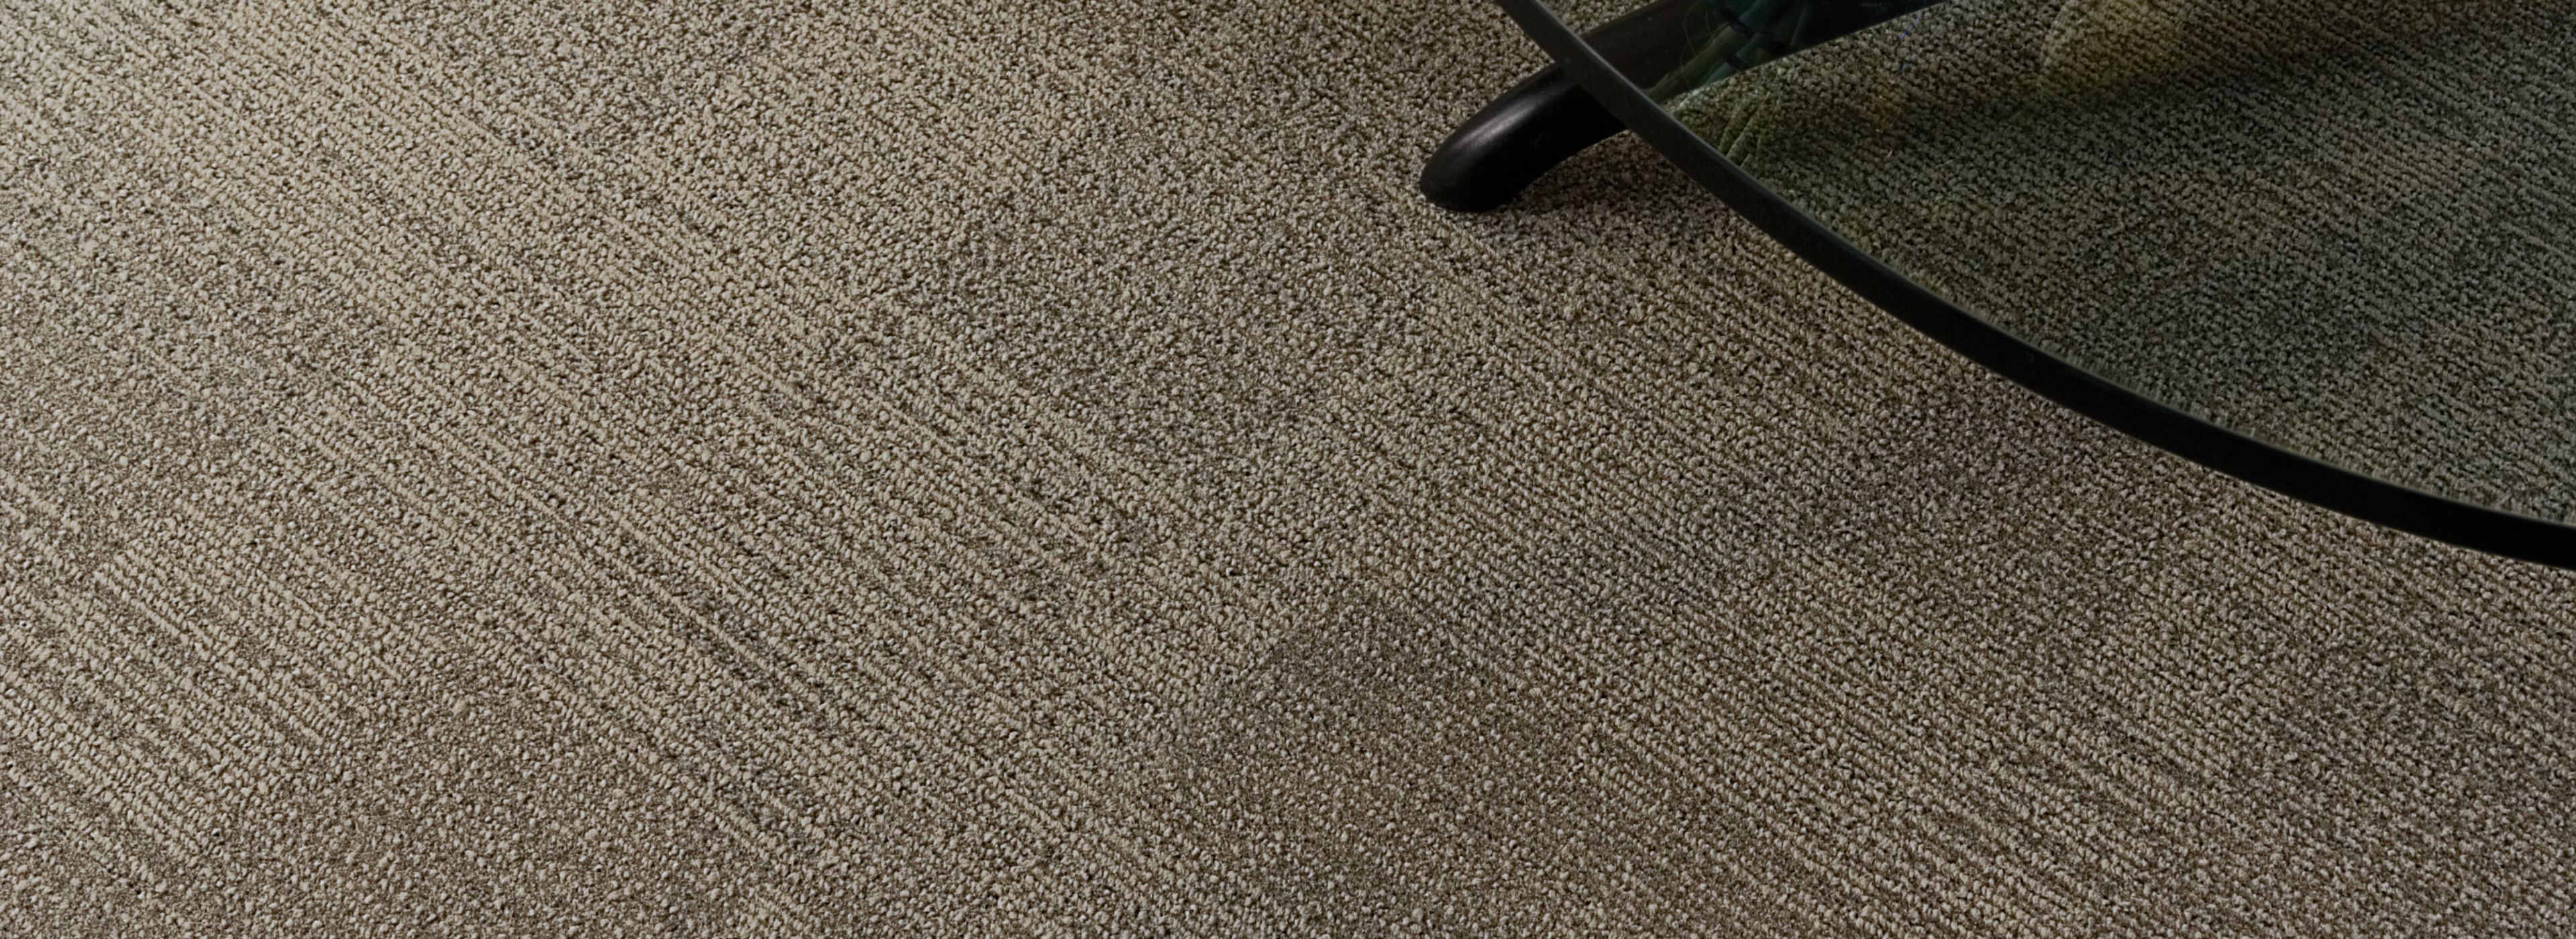 Close up of Interface Bertola carpet tile imagen número 1